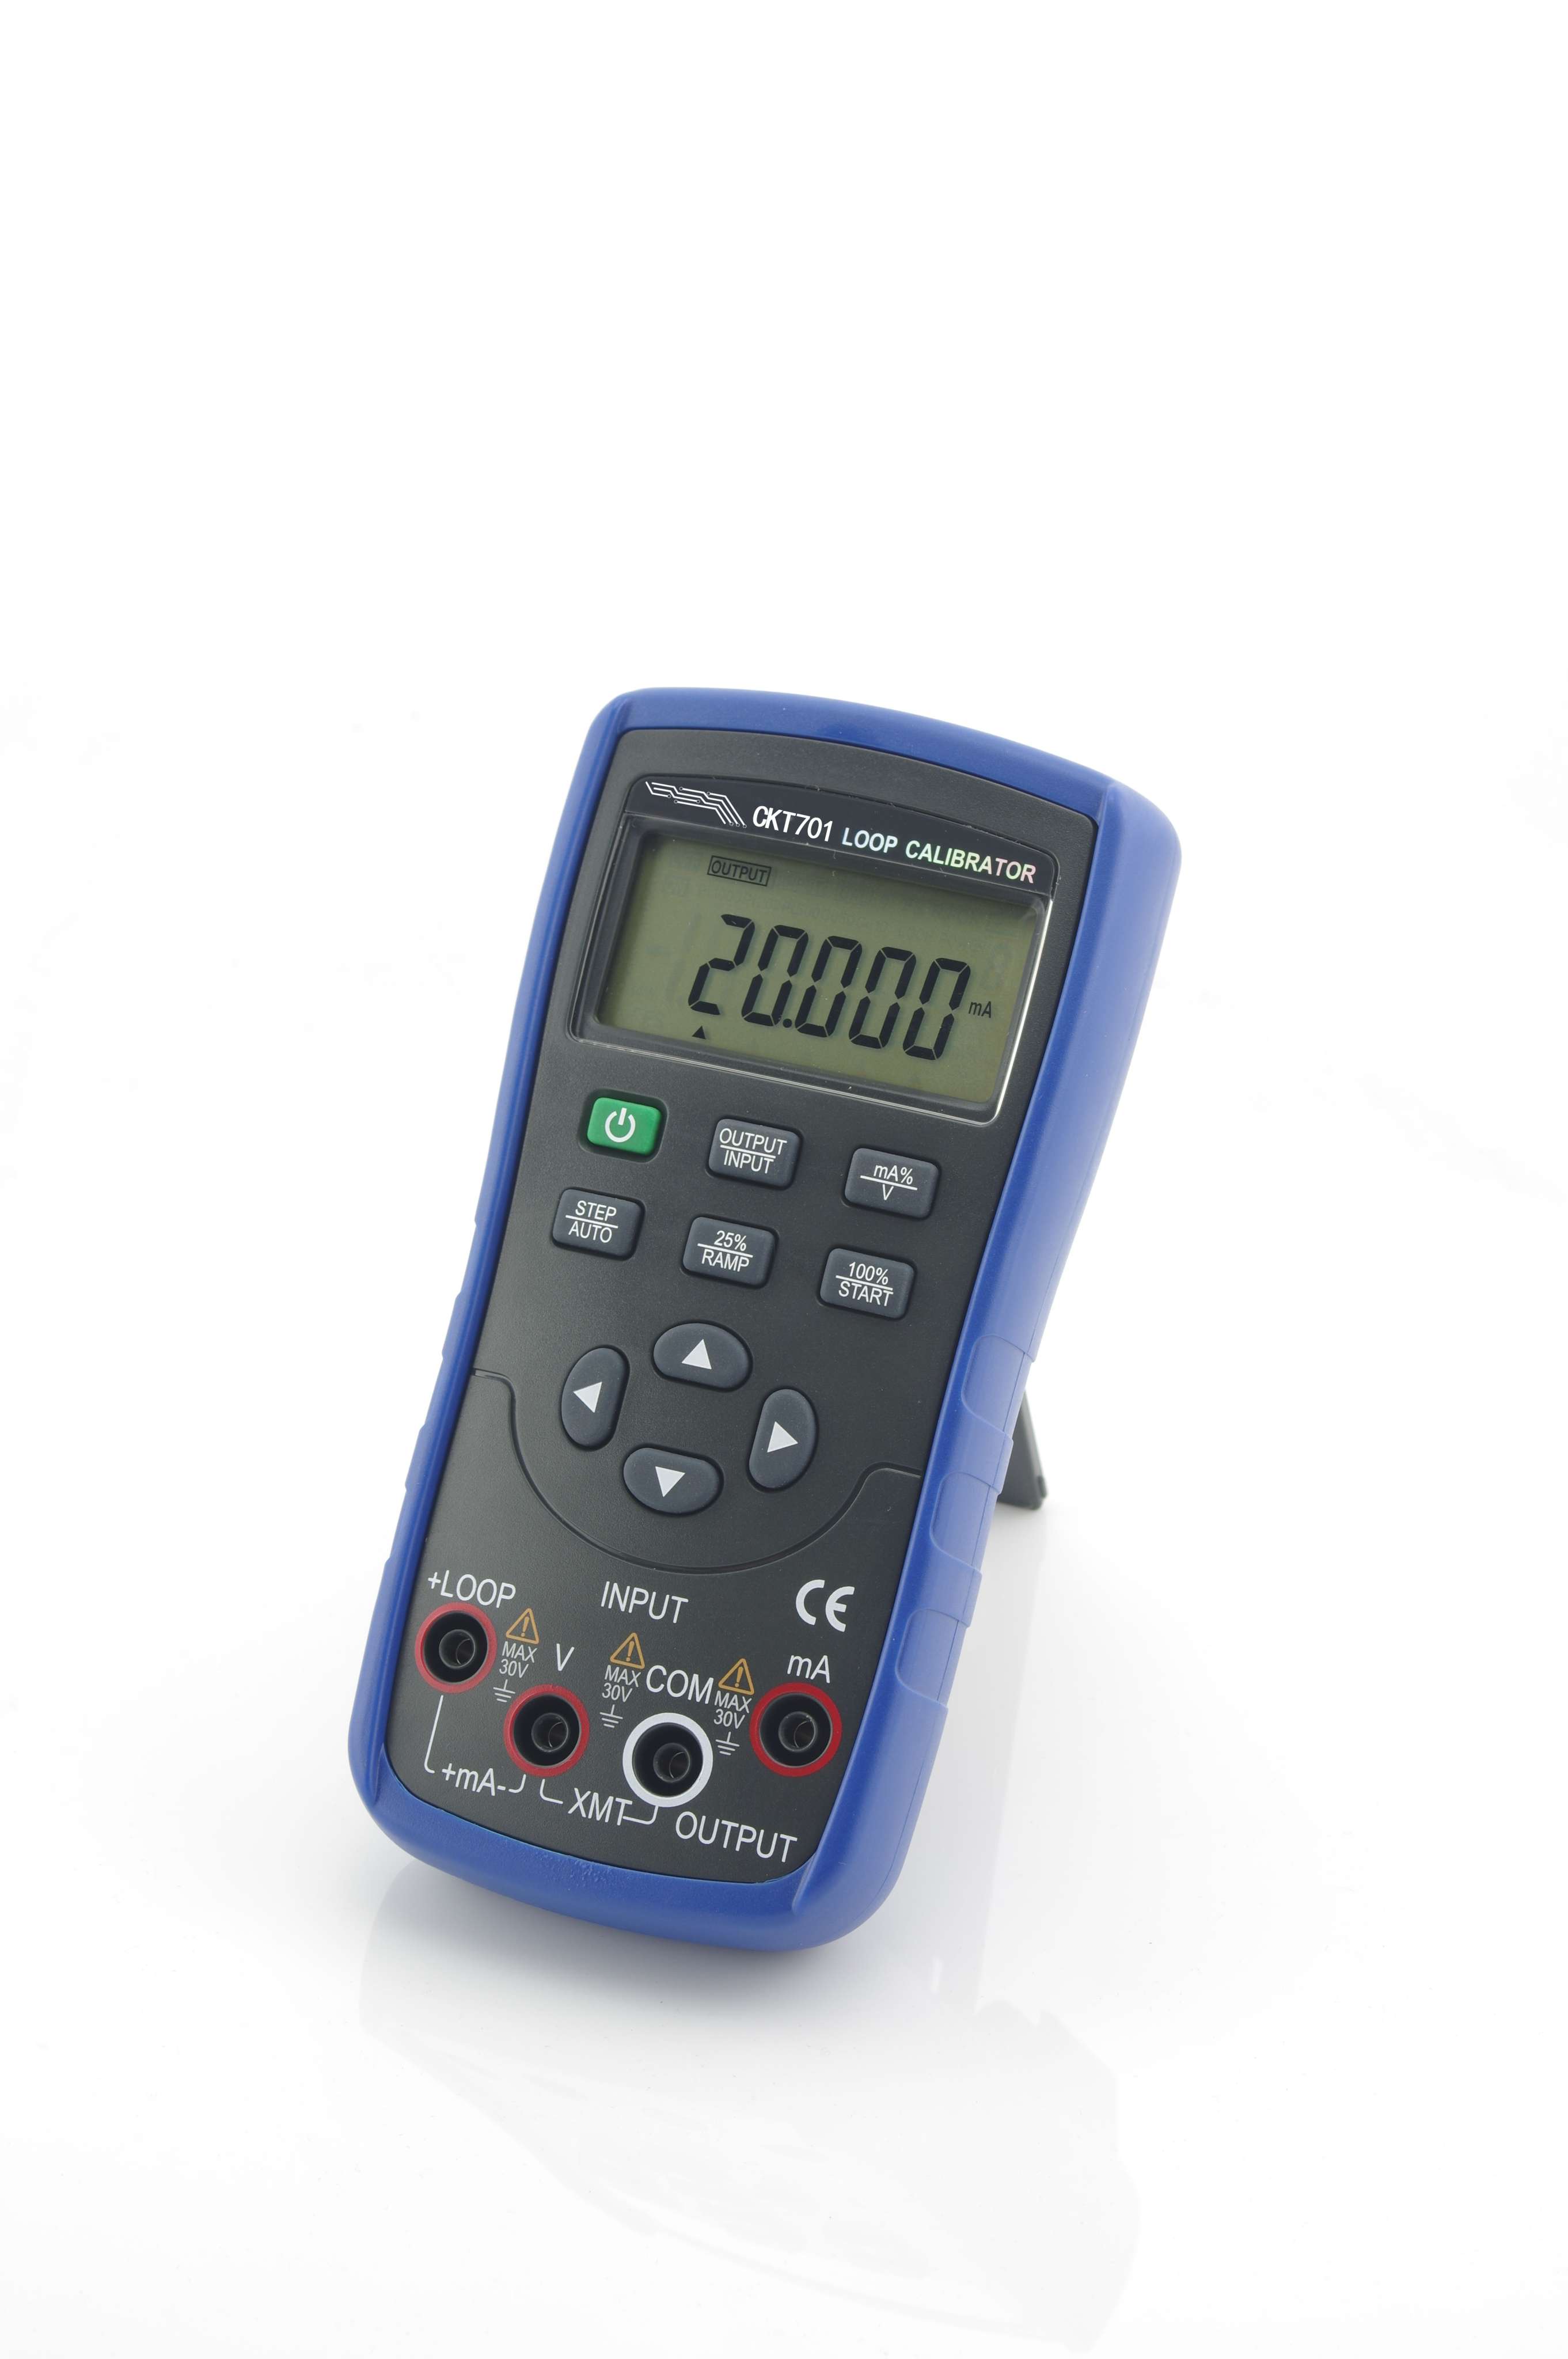 CKT701 Multifunction Process Calibrator